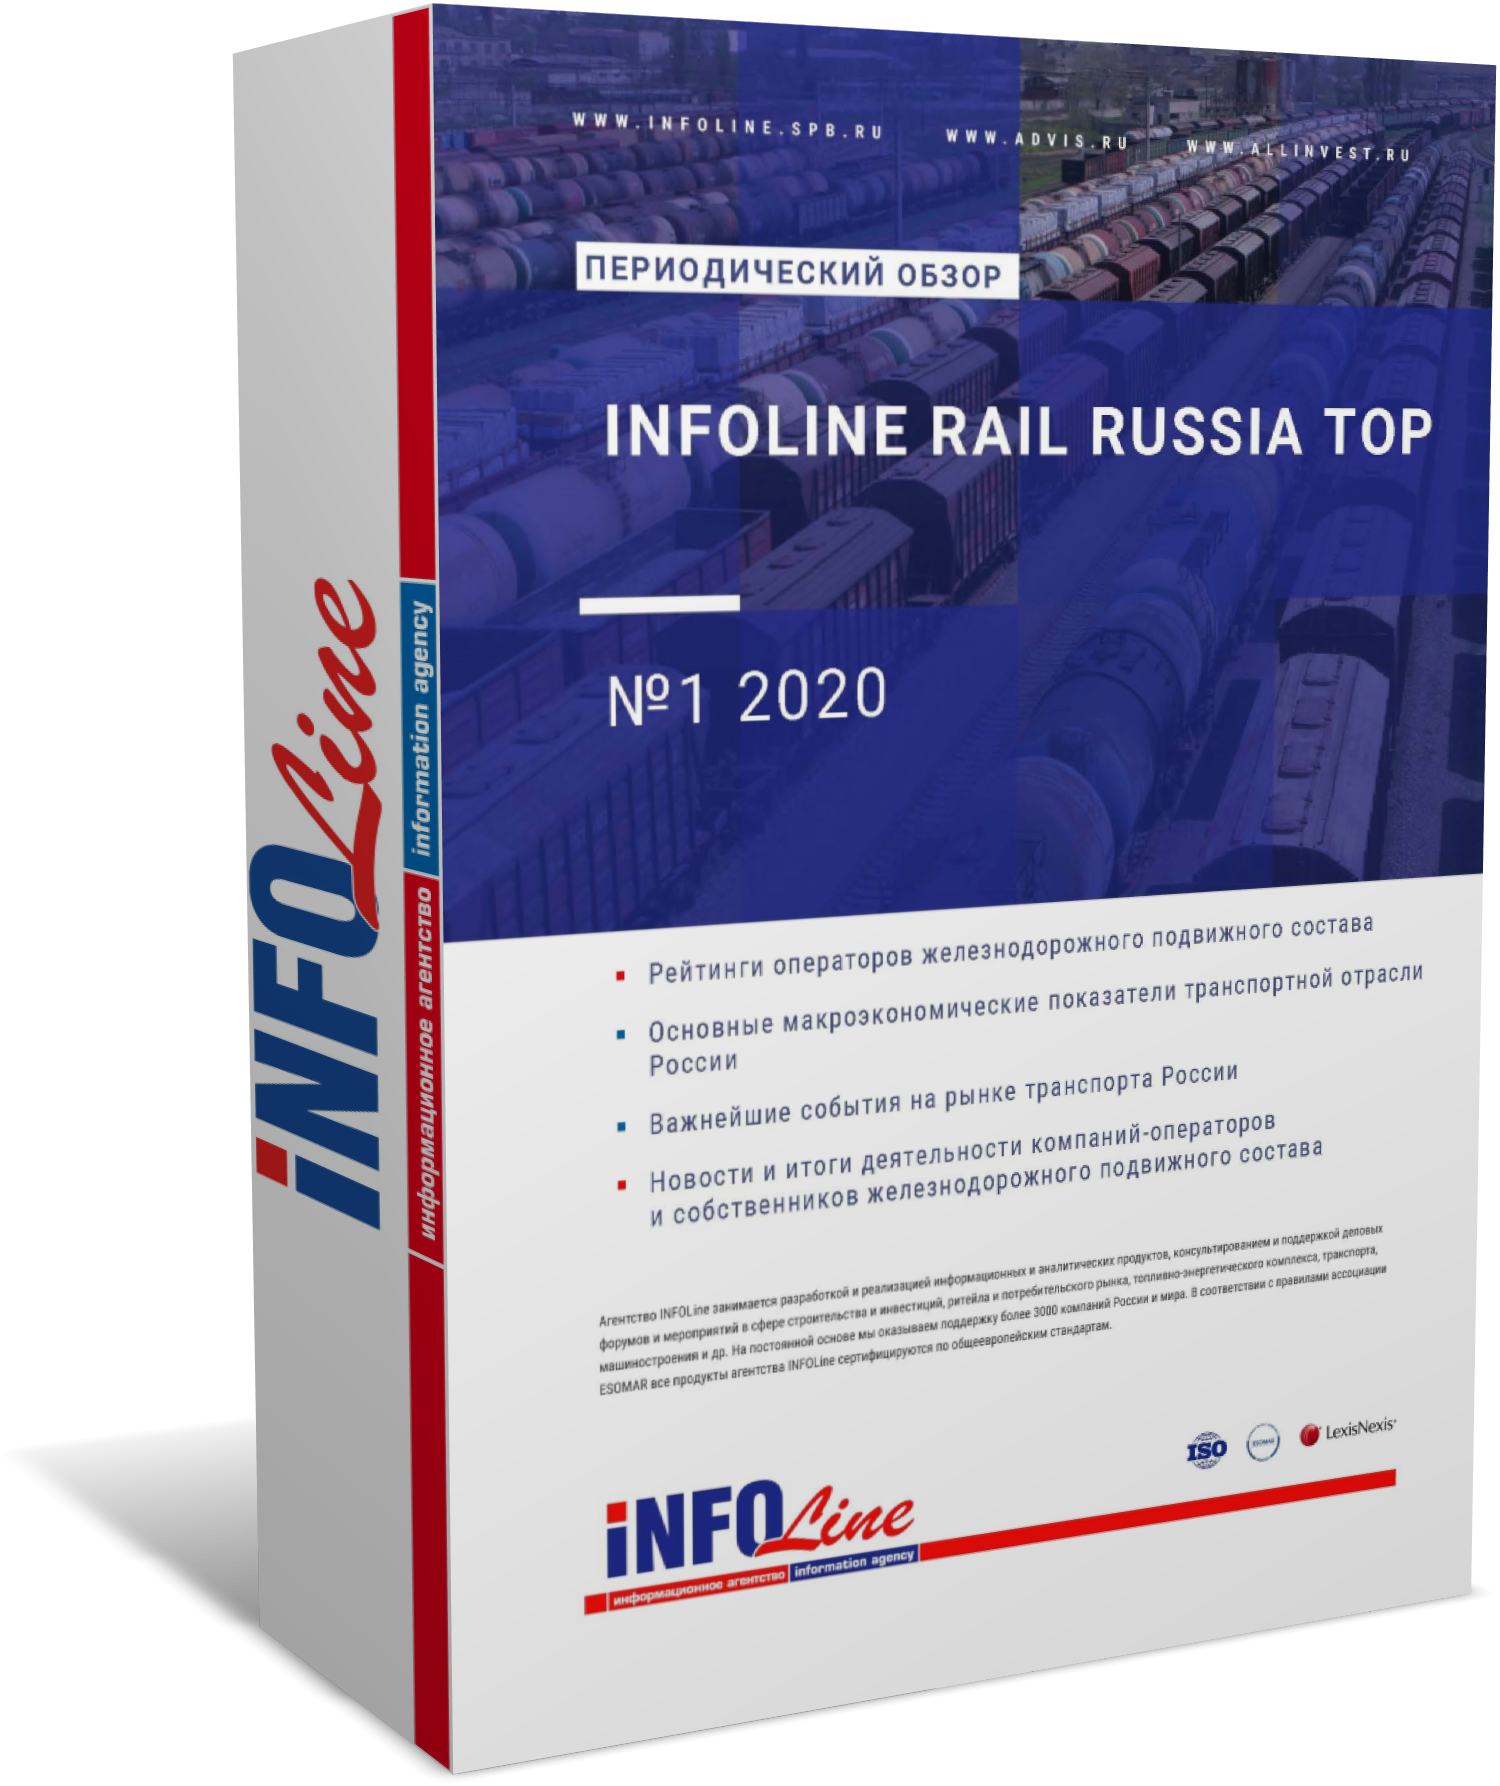 "INFOLine Rail Russia TOP: 1 2020 "